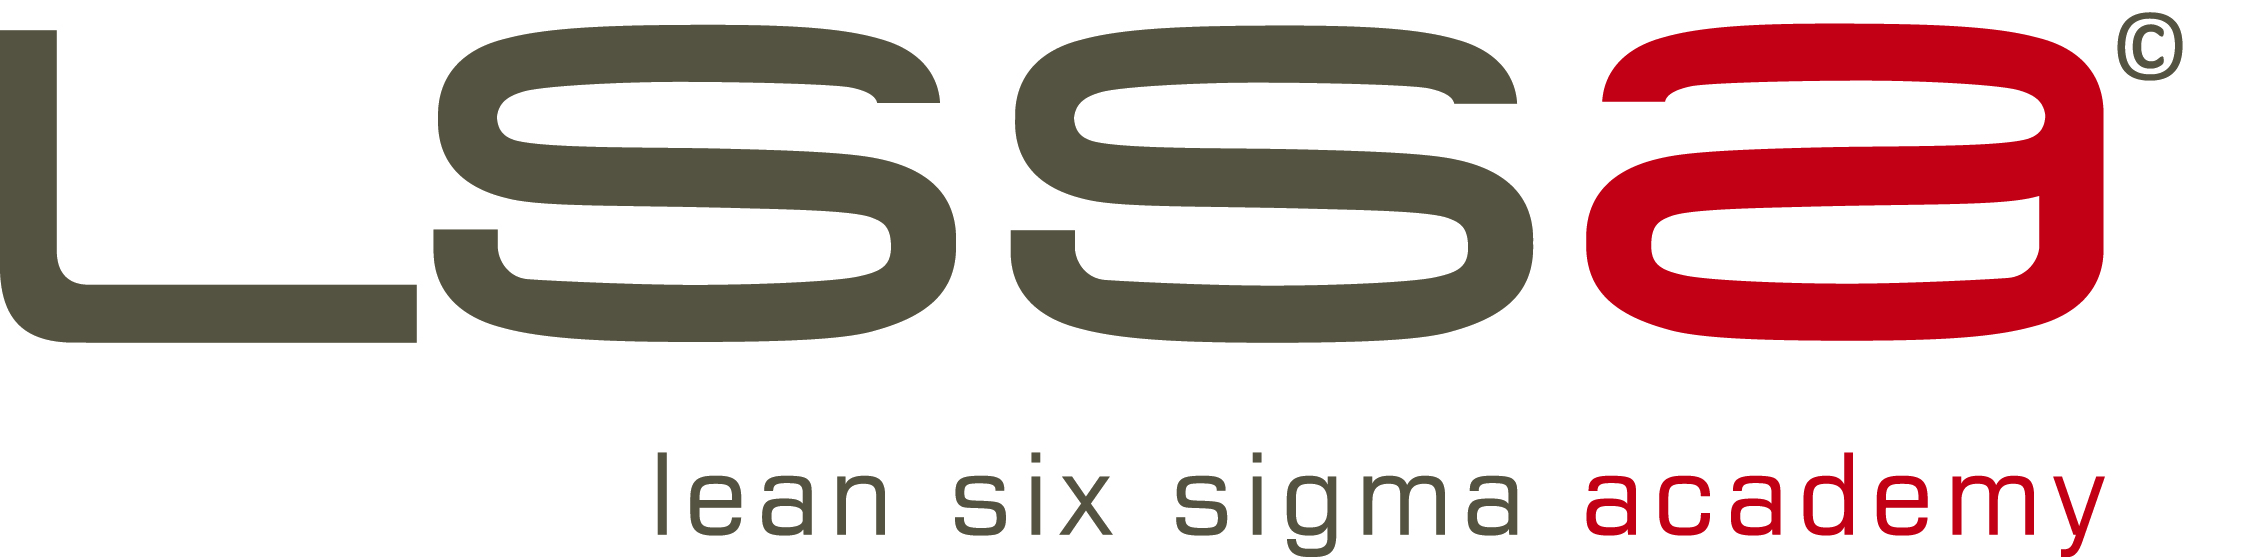 LSSA - Lean Six Sigma Academy